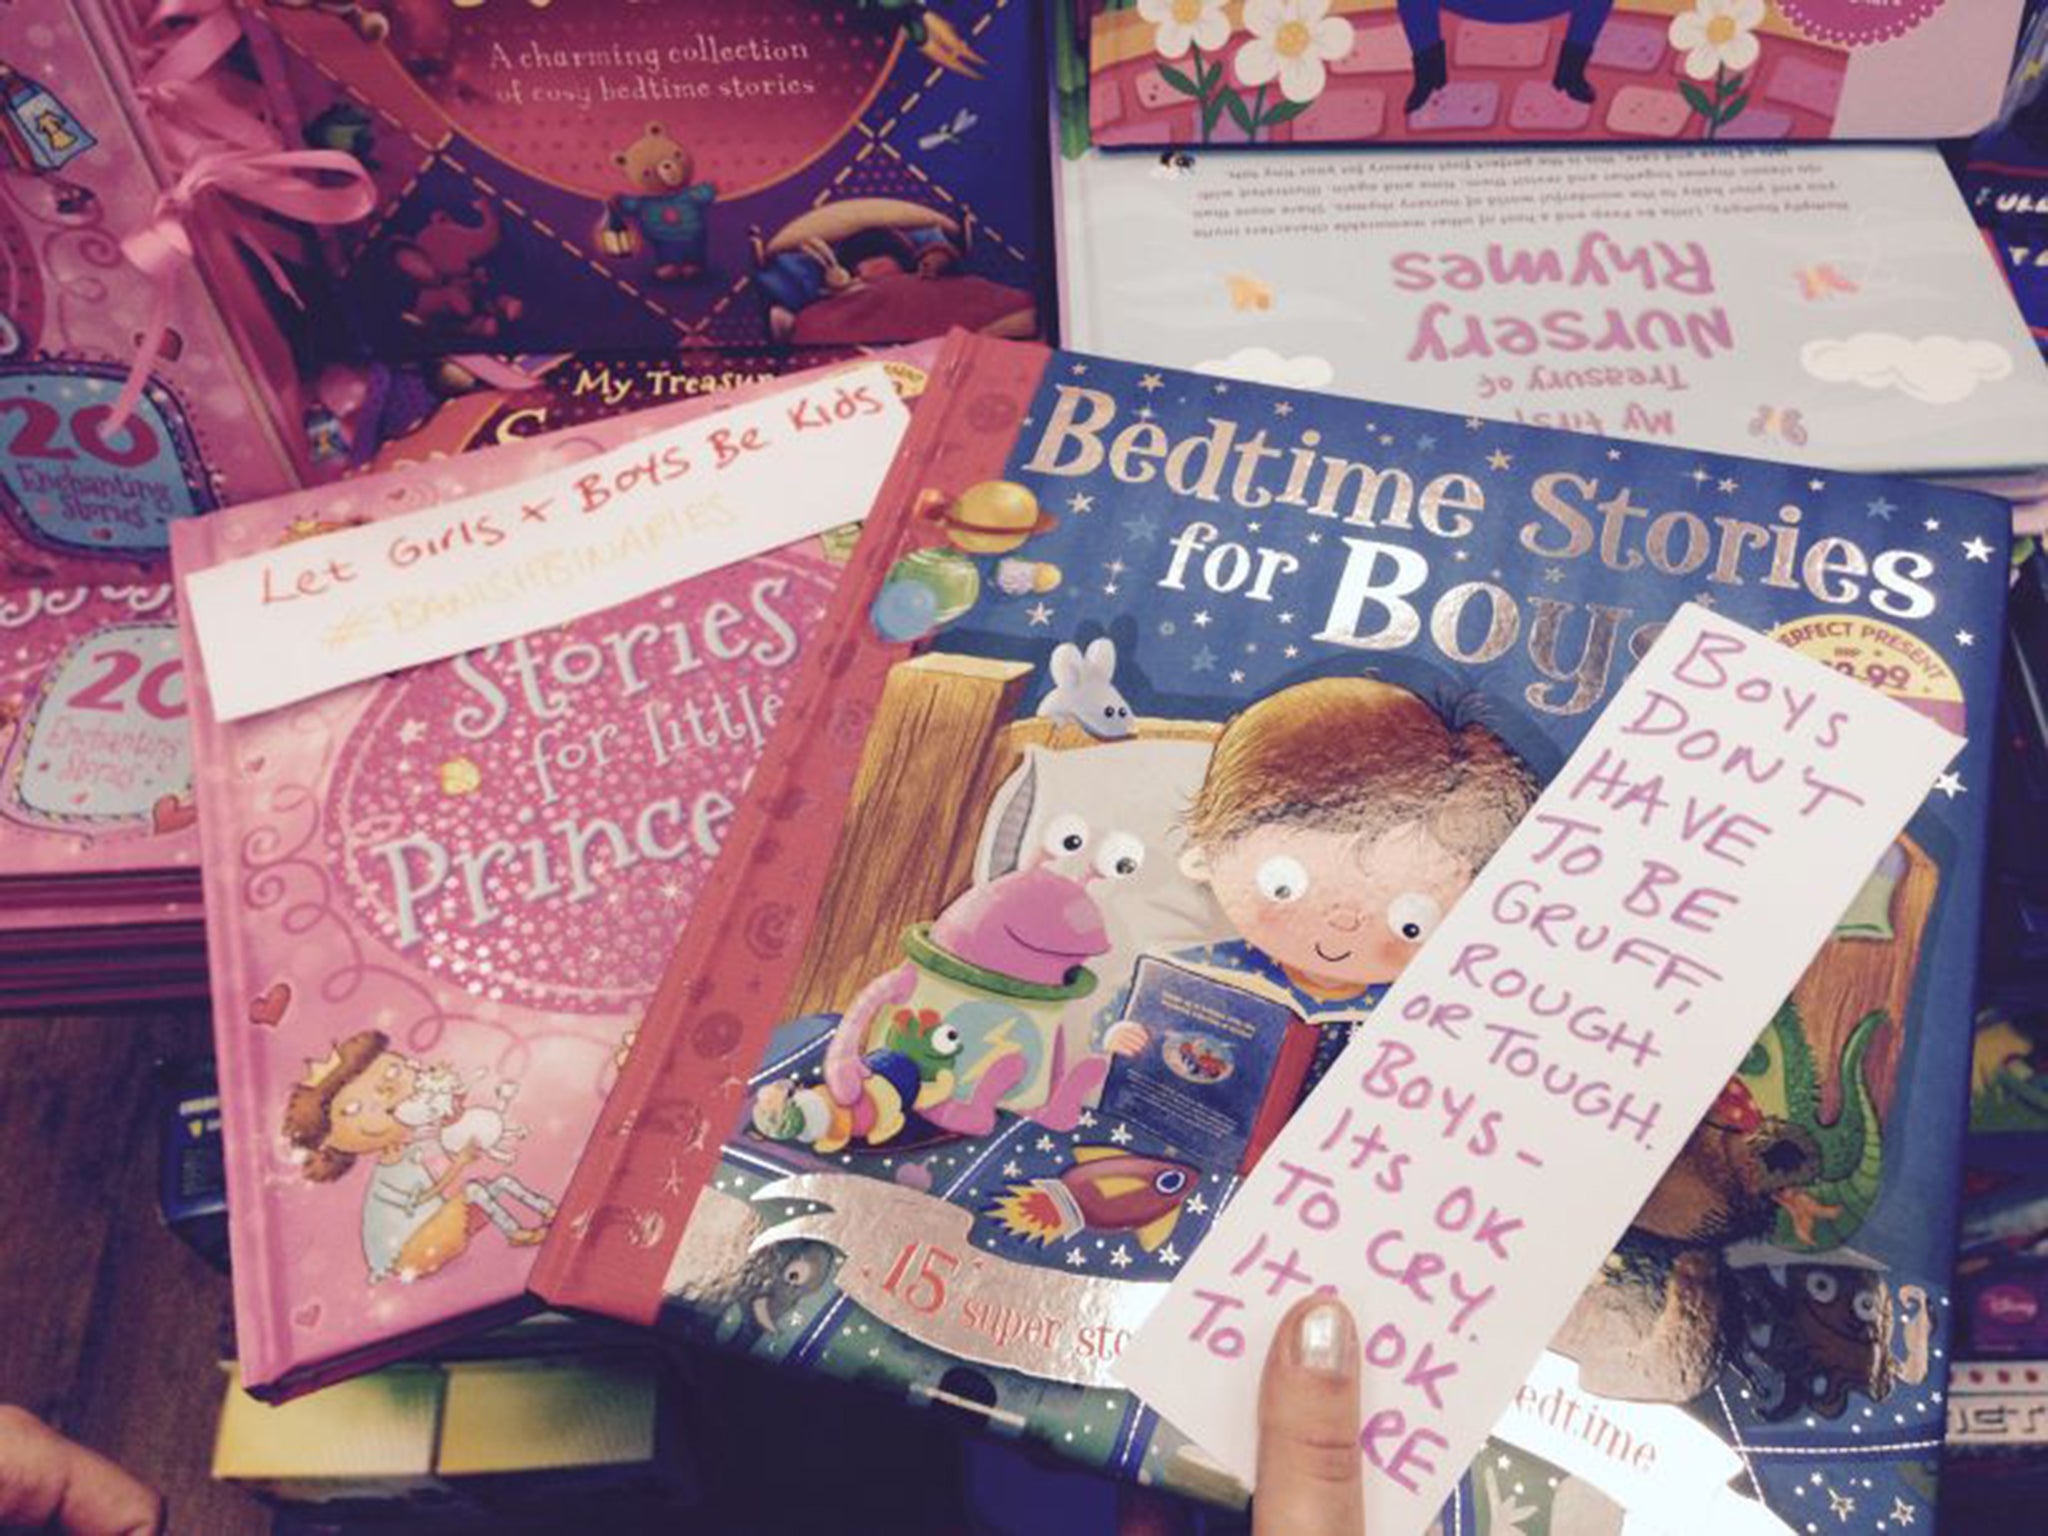 The Chelt Fems group has left ‘gender busting’ messages in children’s books